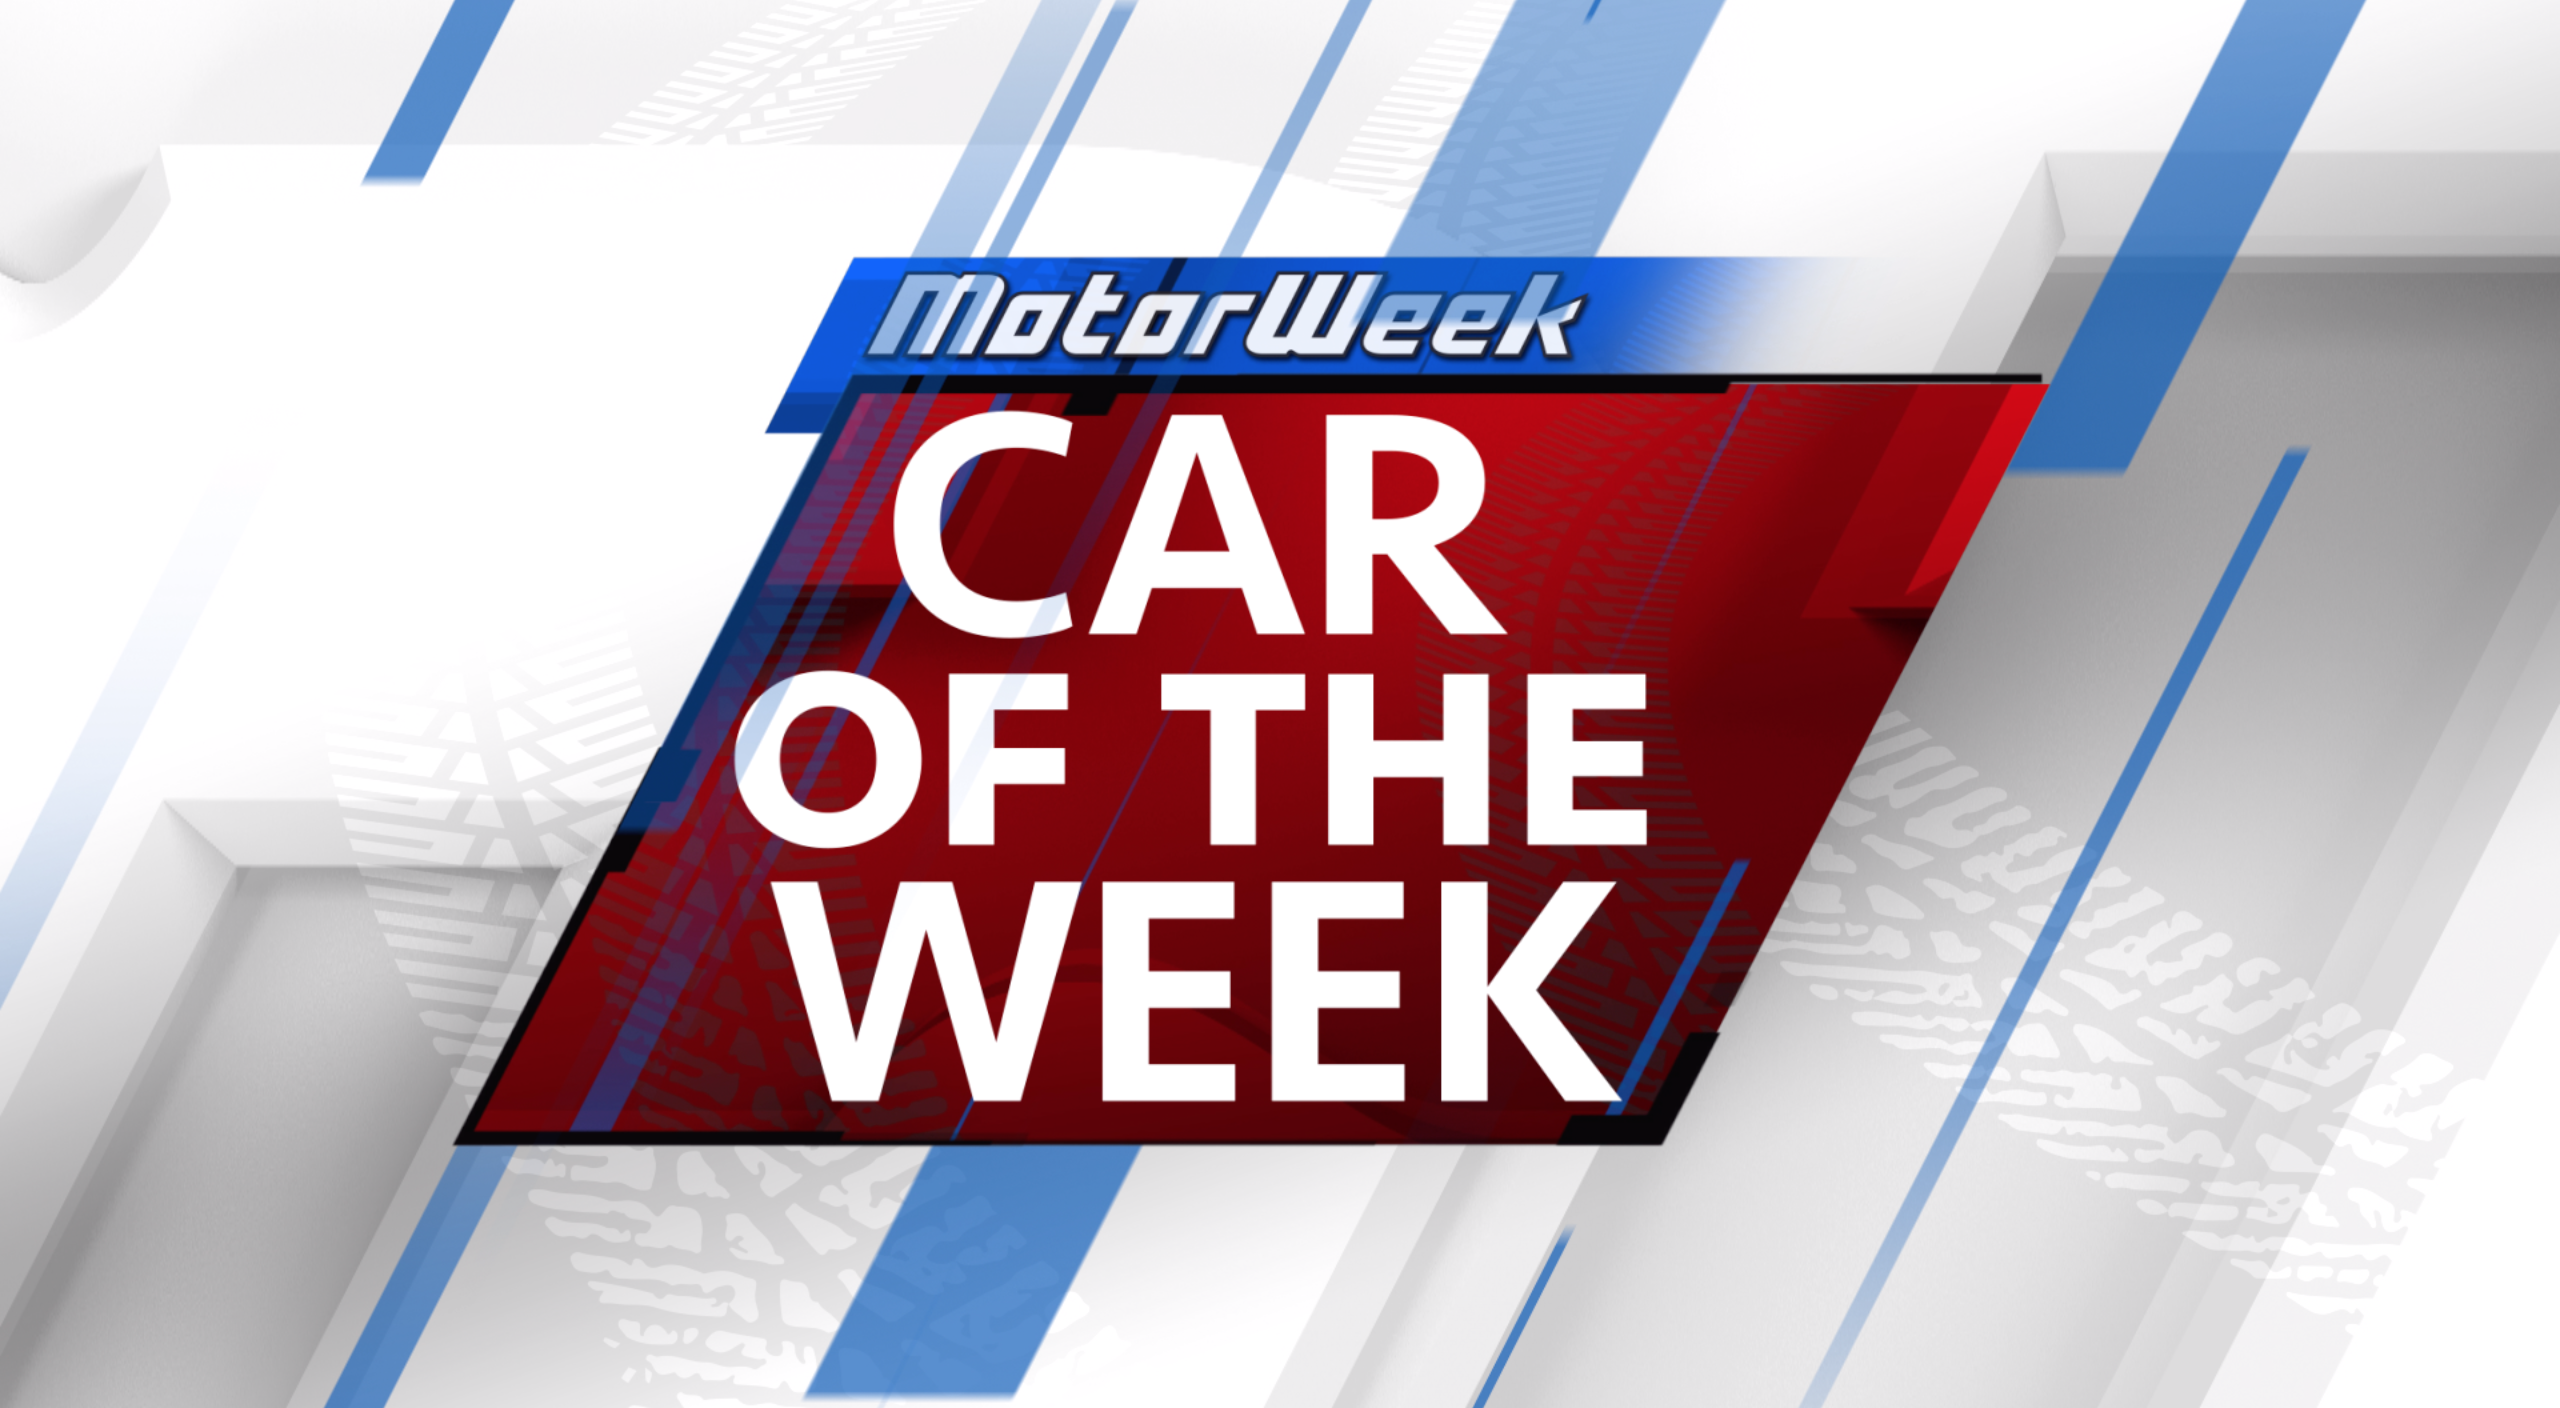 MotorWeek’s “Car of the Week” Segment Returns!